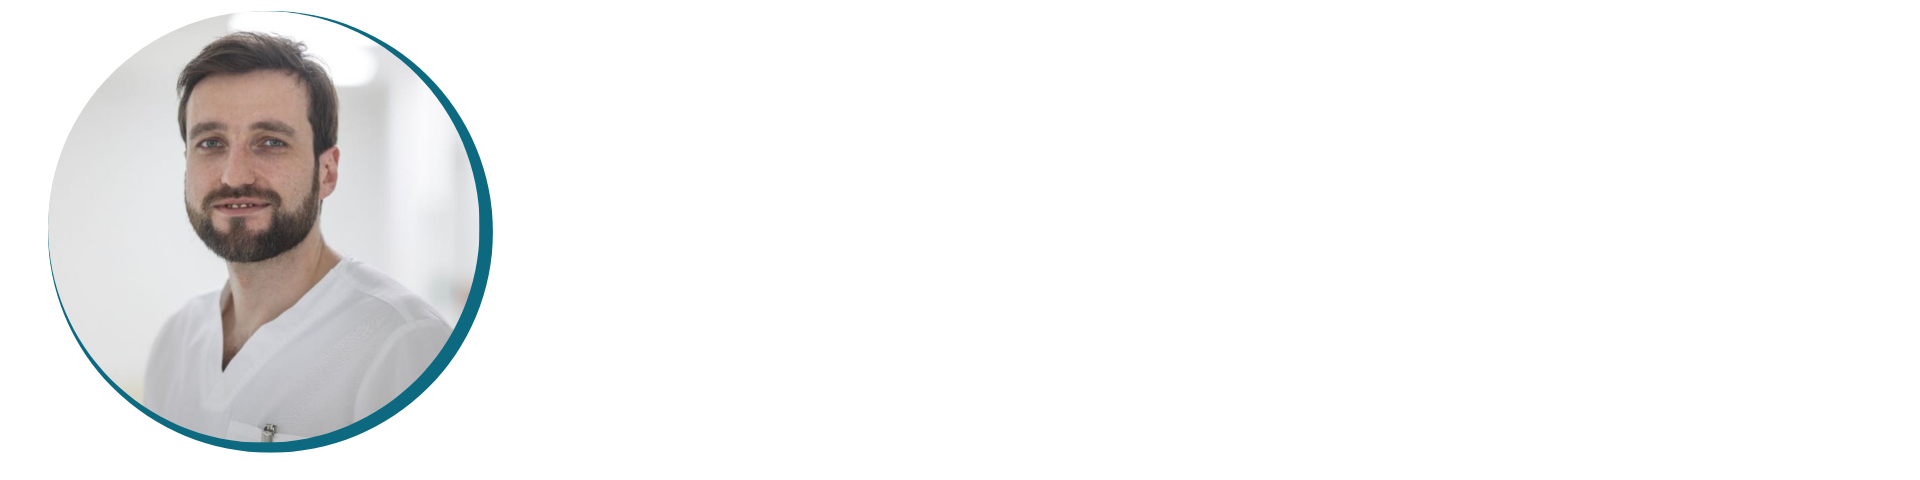 Our expert analyst, Doctor Razvan Radu from CHU Montpellier, France